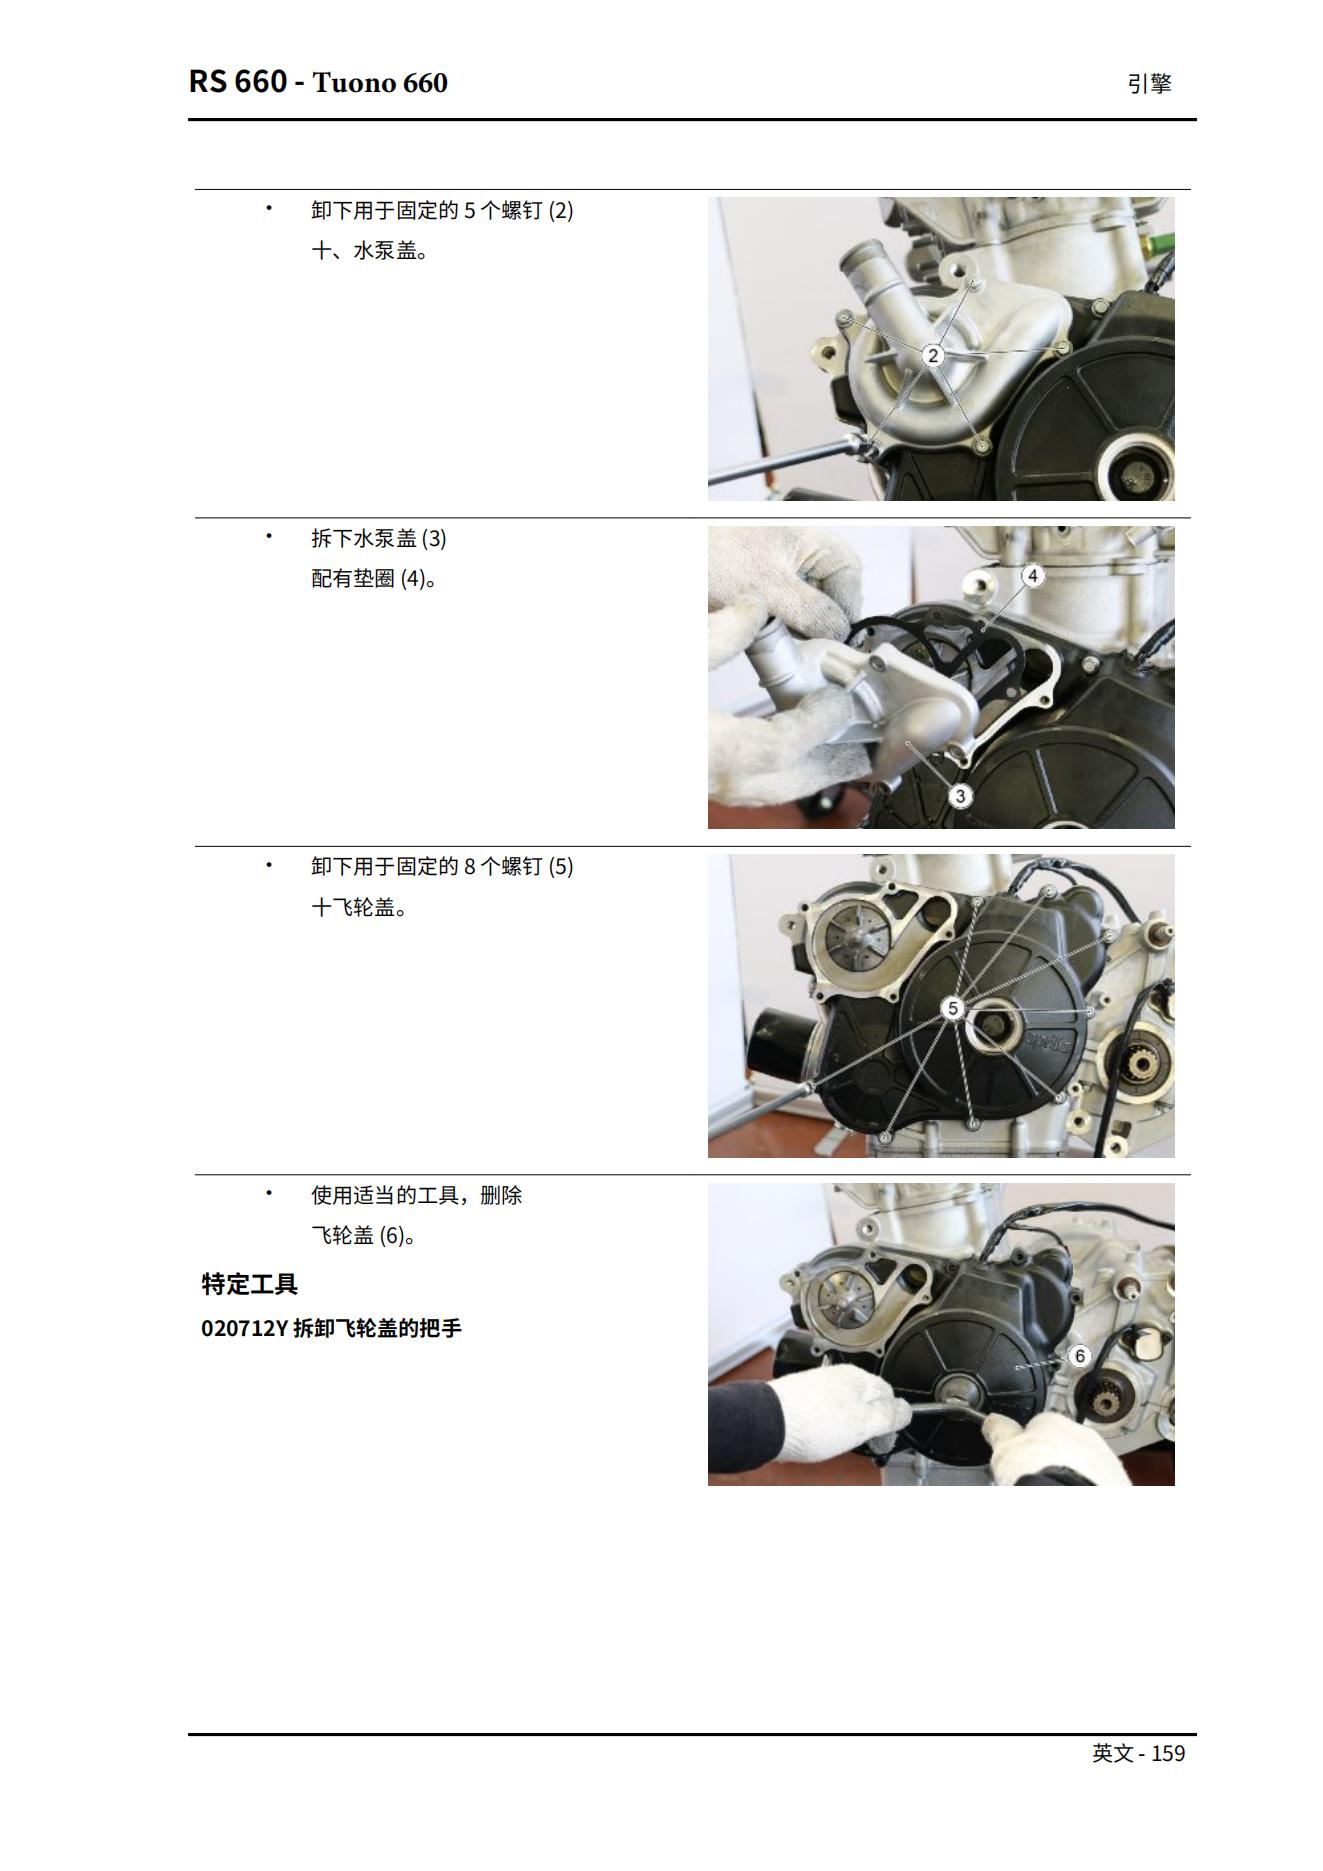 简体中文2021阿普利亚RS660维修手册(含高清电路图)通用tuono660插图3